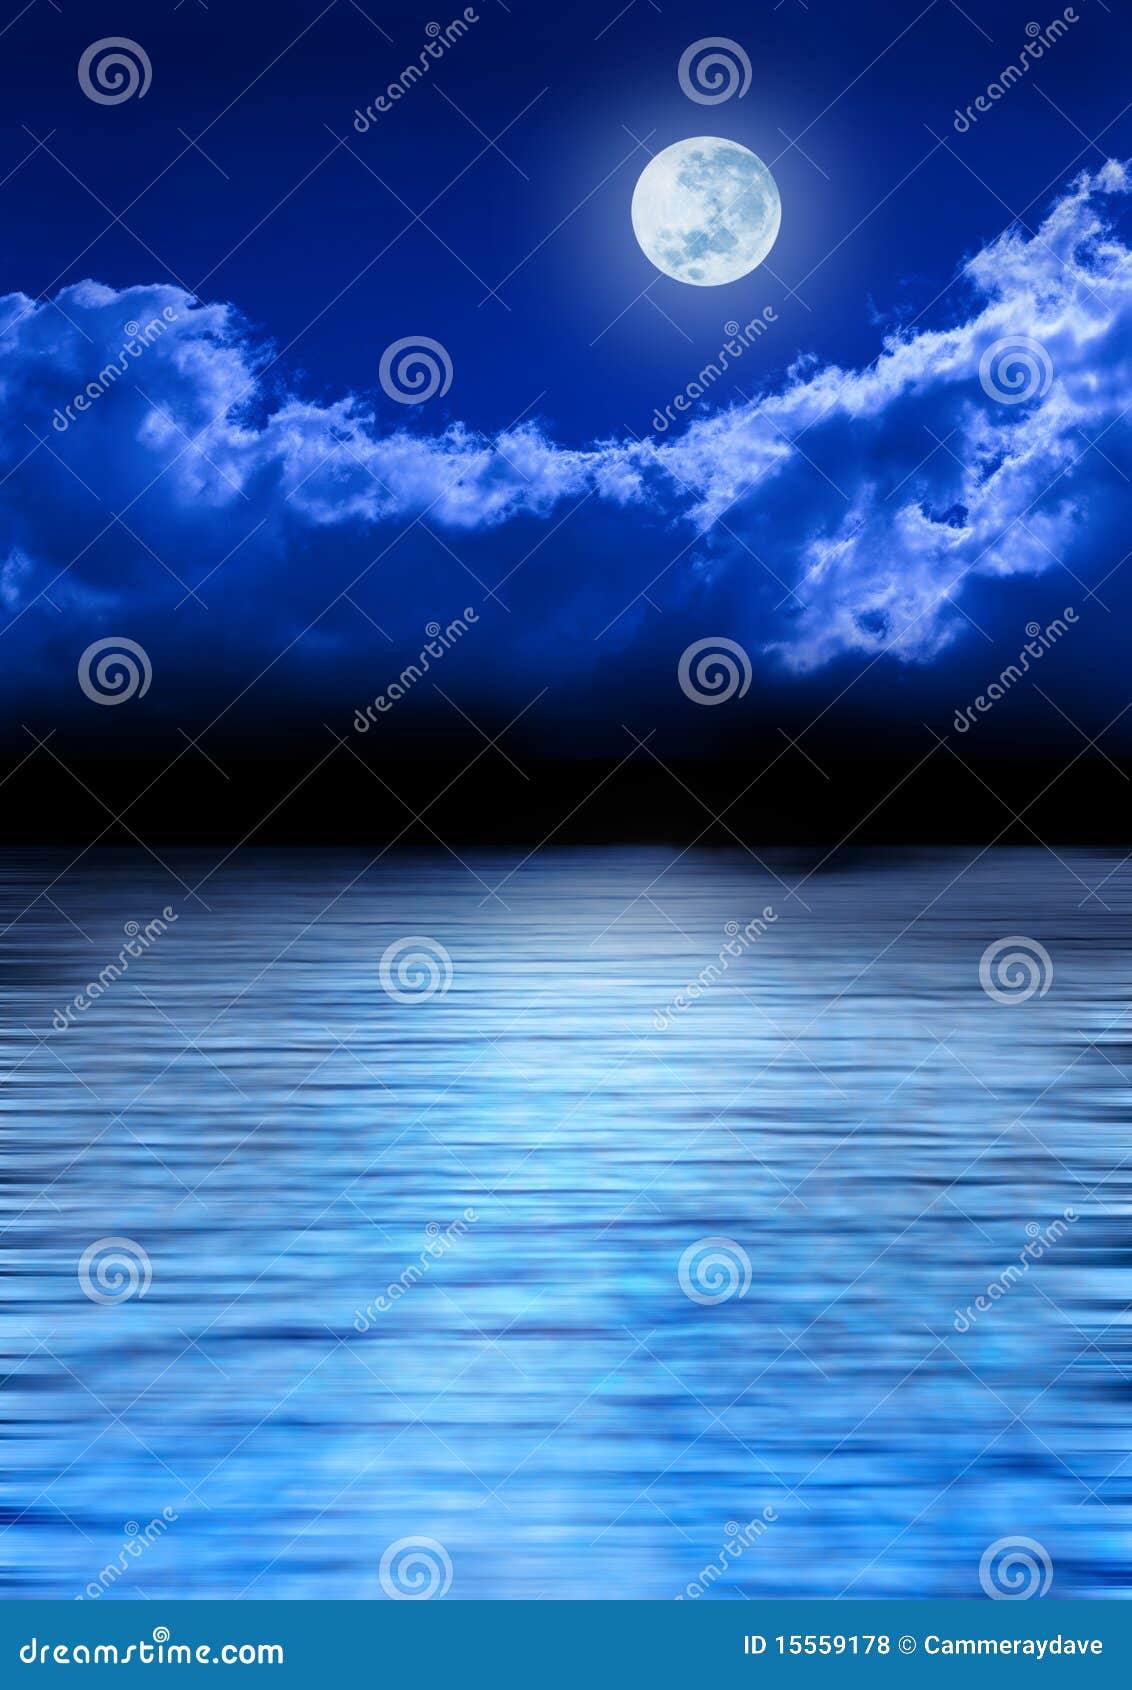 full moon sky and ocean